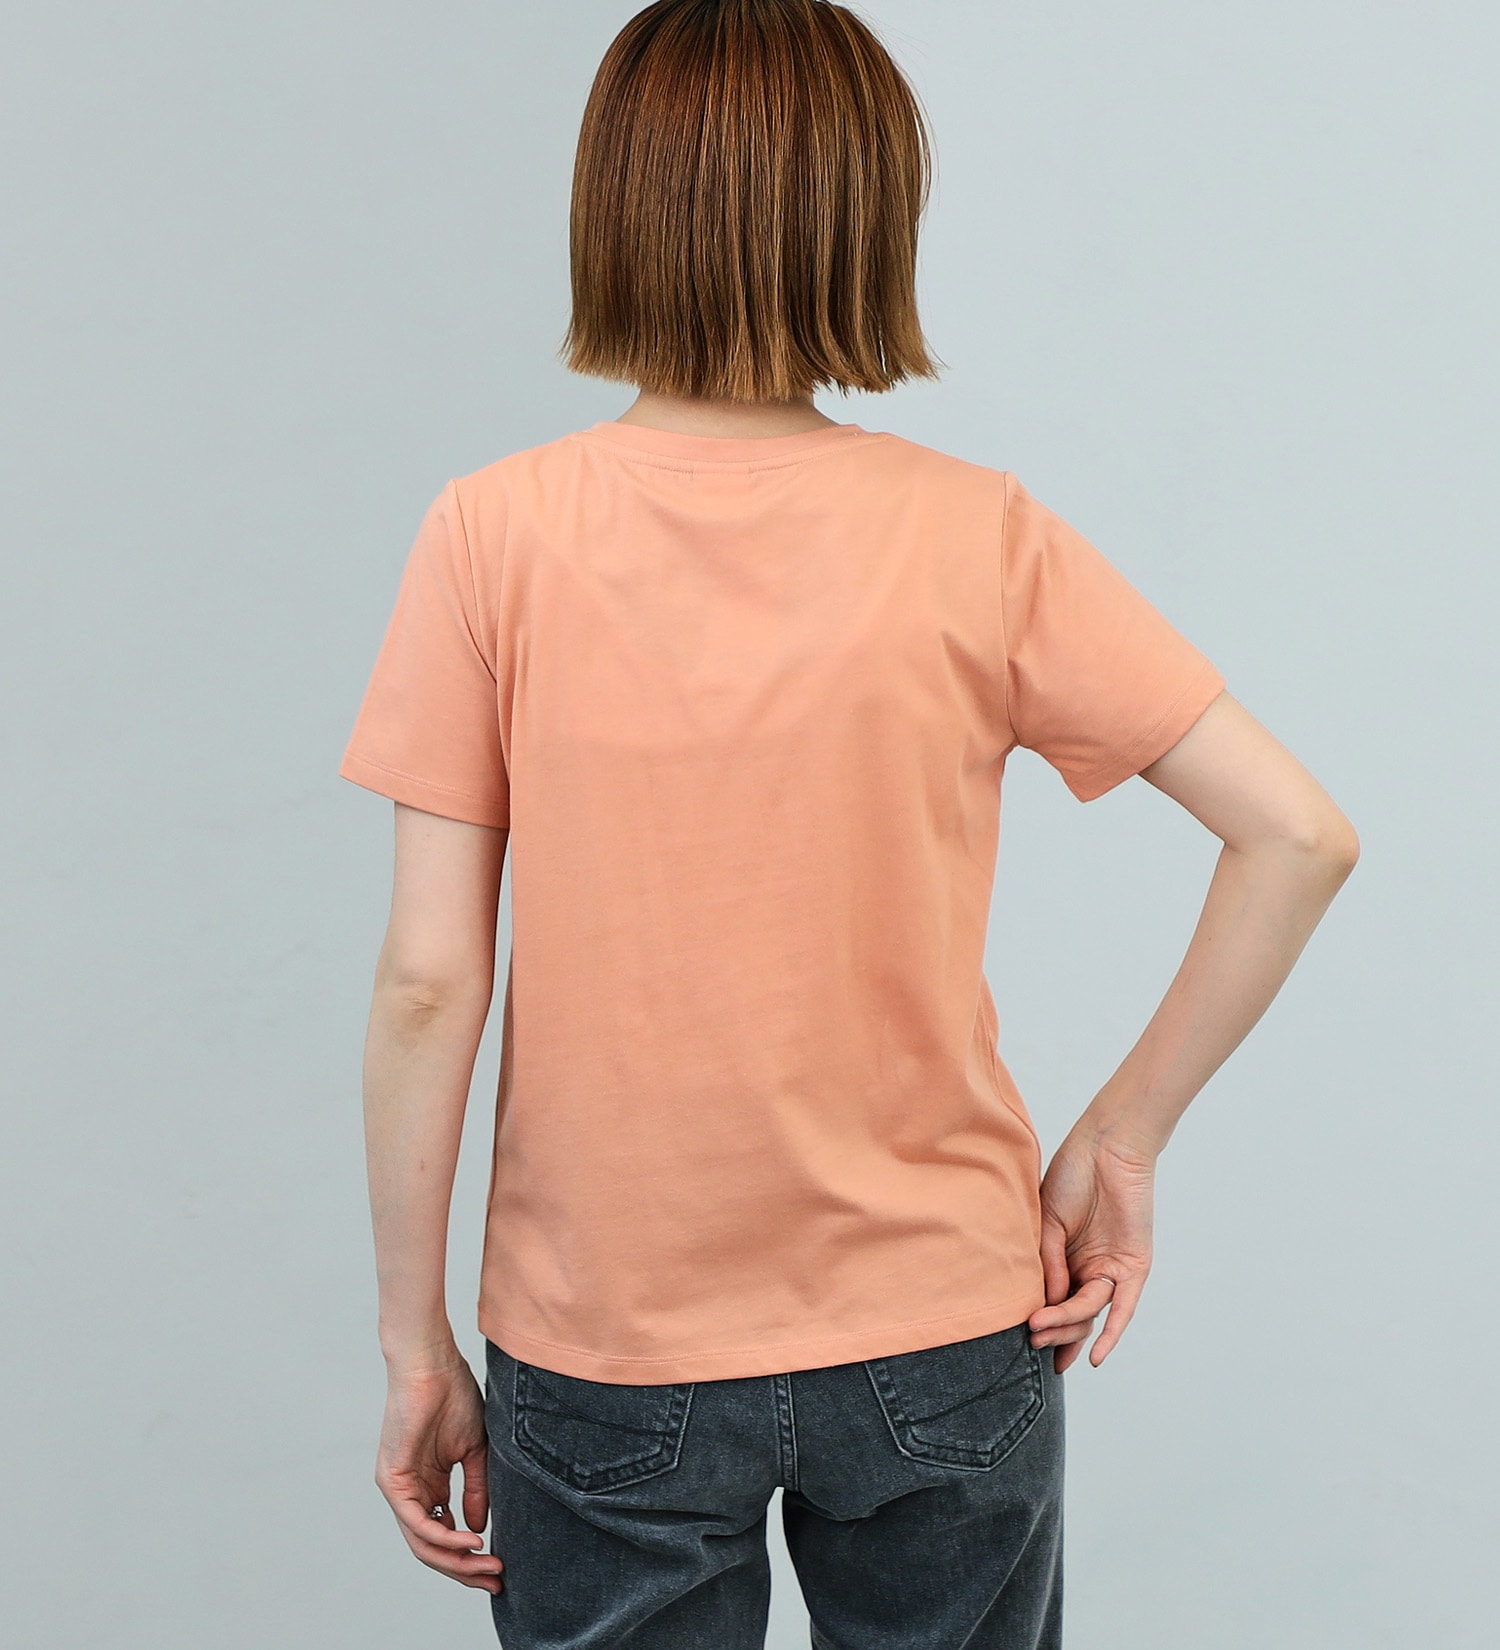 SOMETHING(サムシング)のSOMETHING フォイルプリントTシャツ【半袖】|トップス/Tシャツ/カットソー/レディース|オレンジ